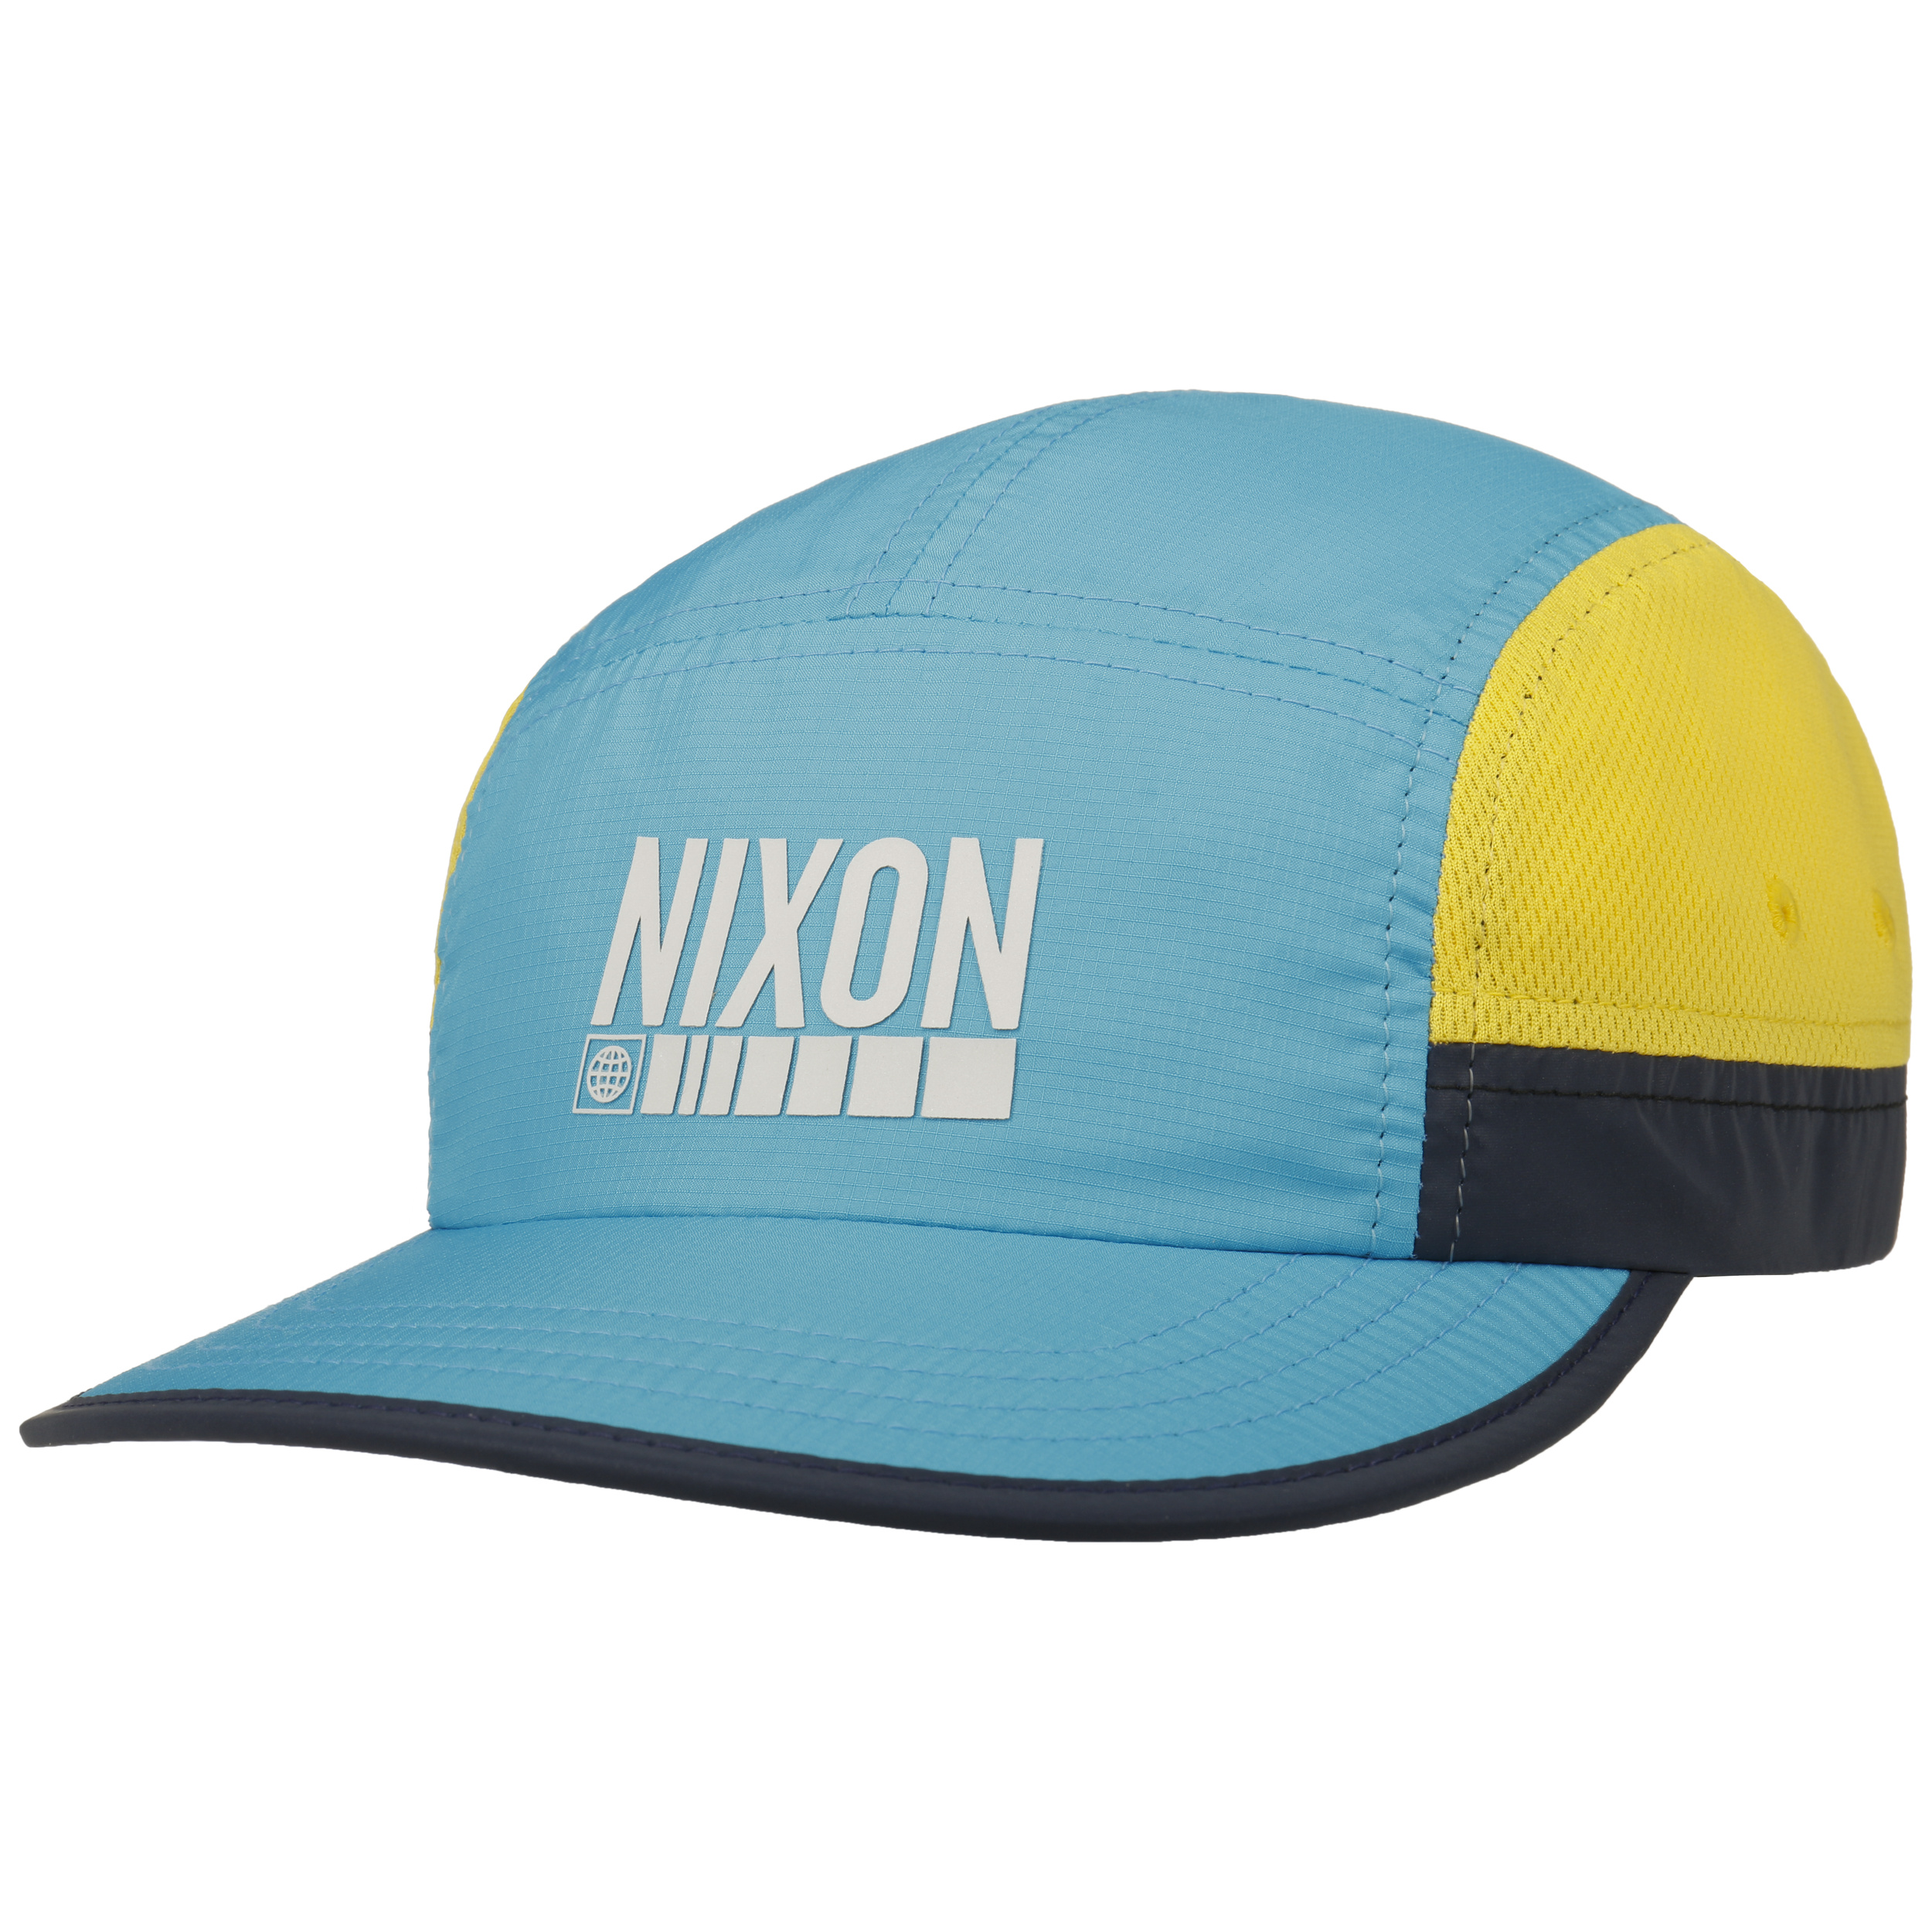 2018 NWT NIXON PREP STRAPBACK $32 Khaki cotton twill dad hat shallow fit 